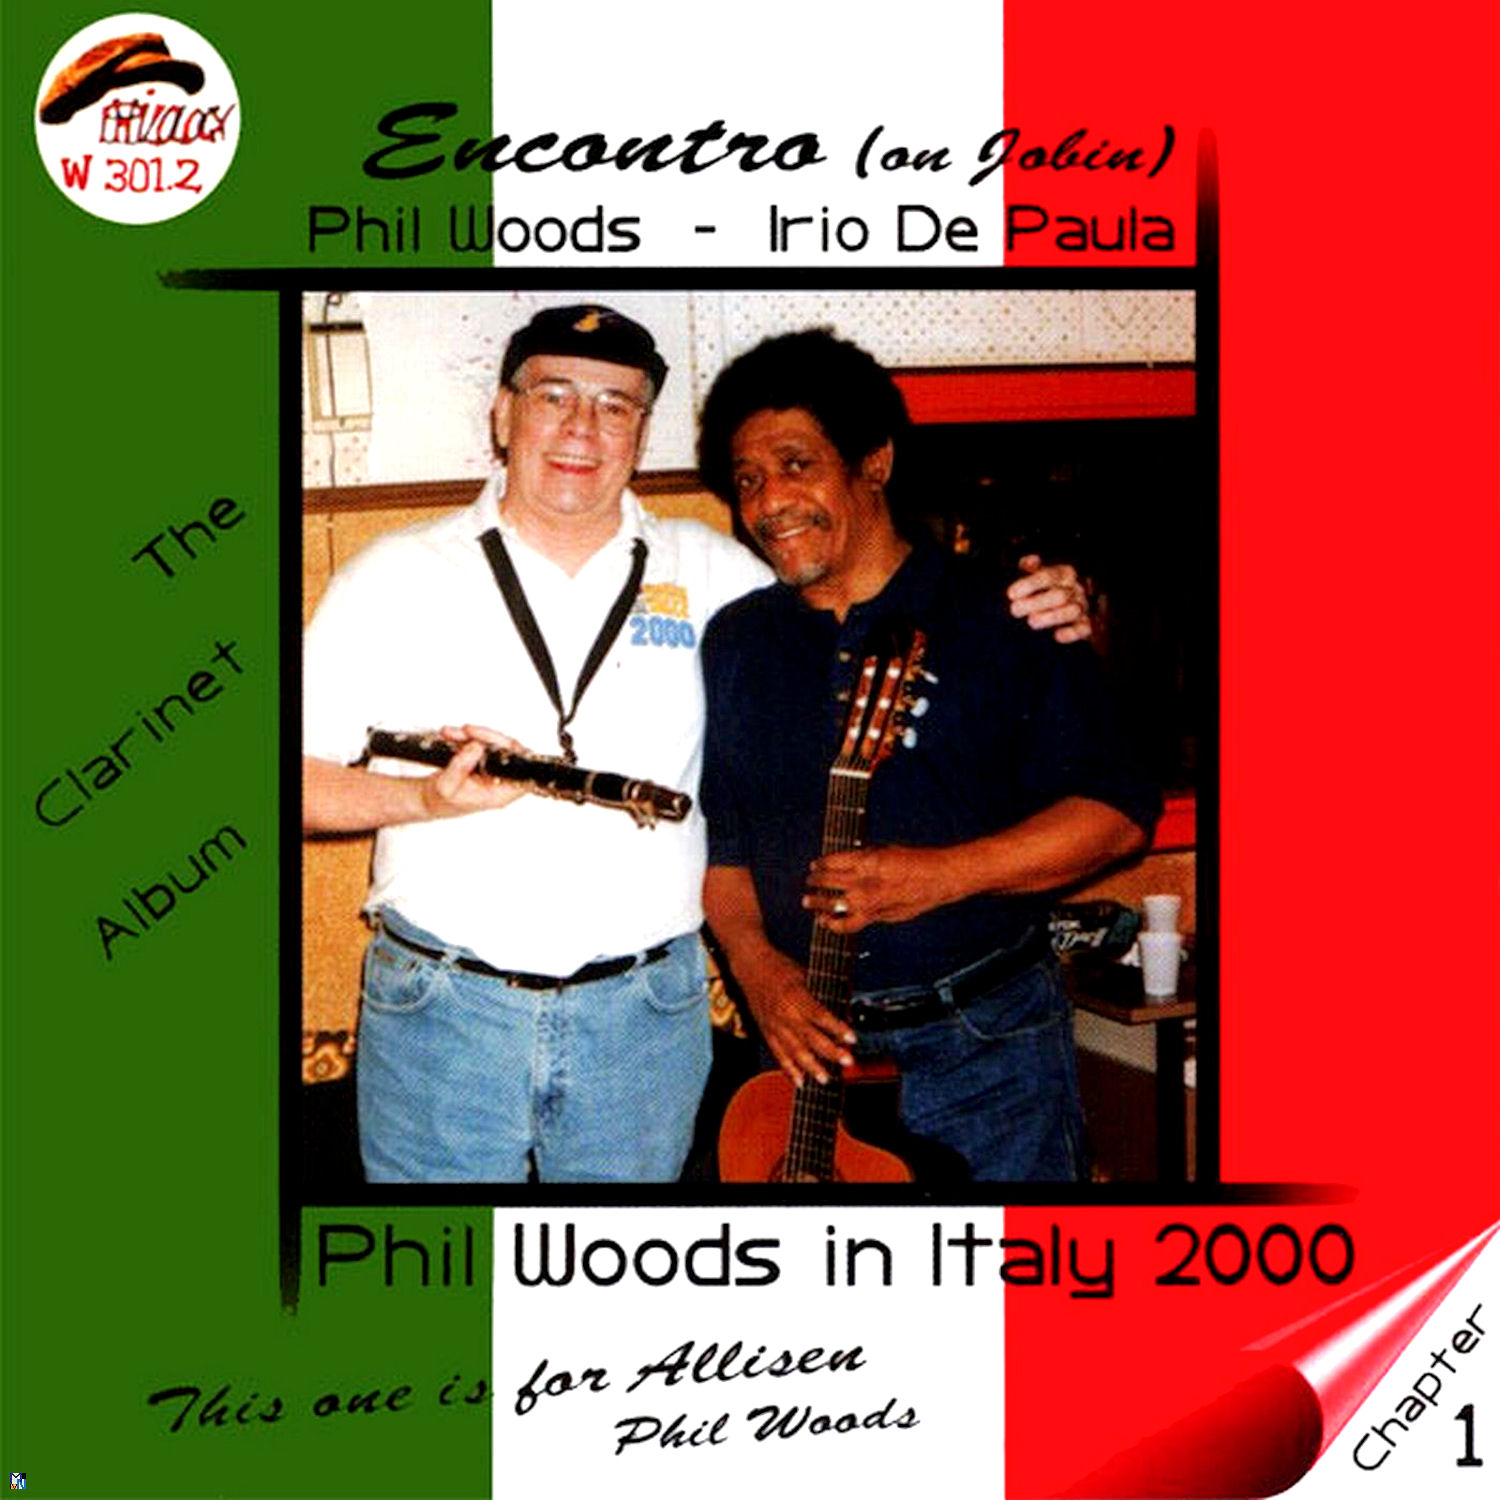 PHIL WOODS - Encontro (on Jobim) cover 